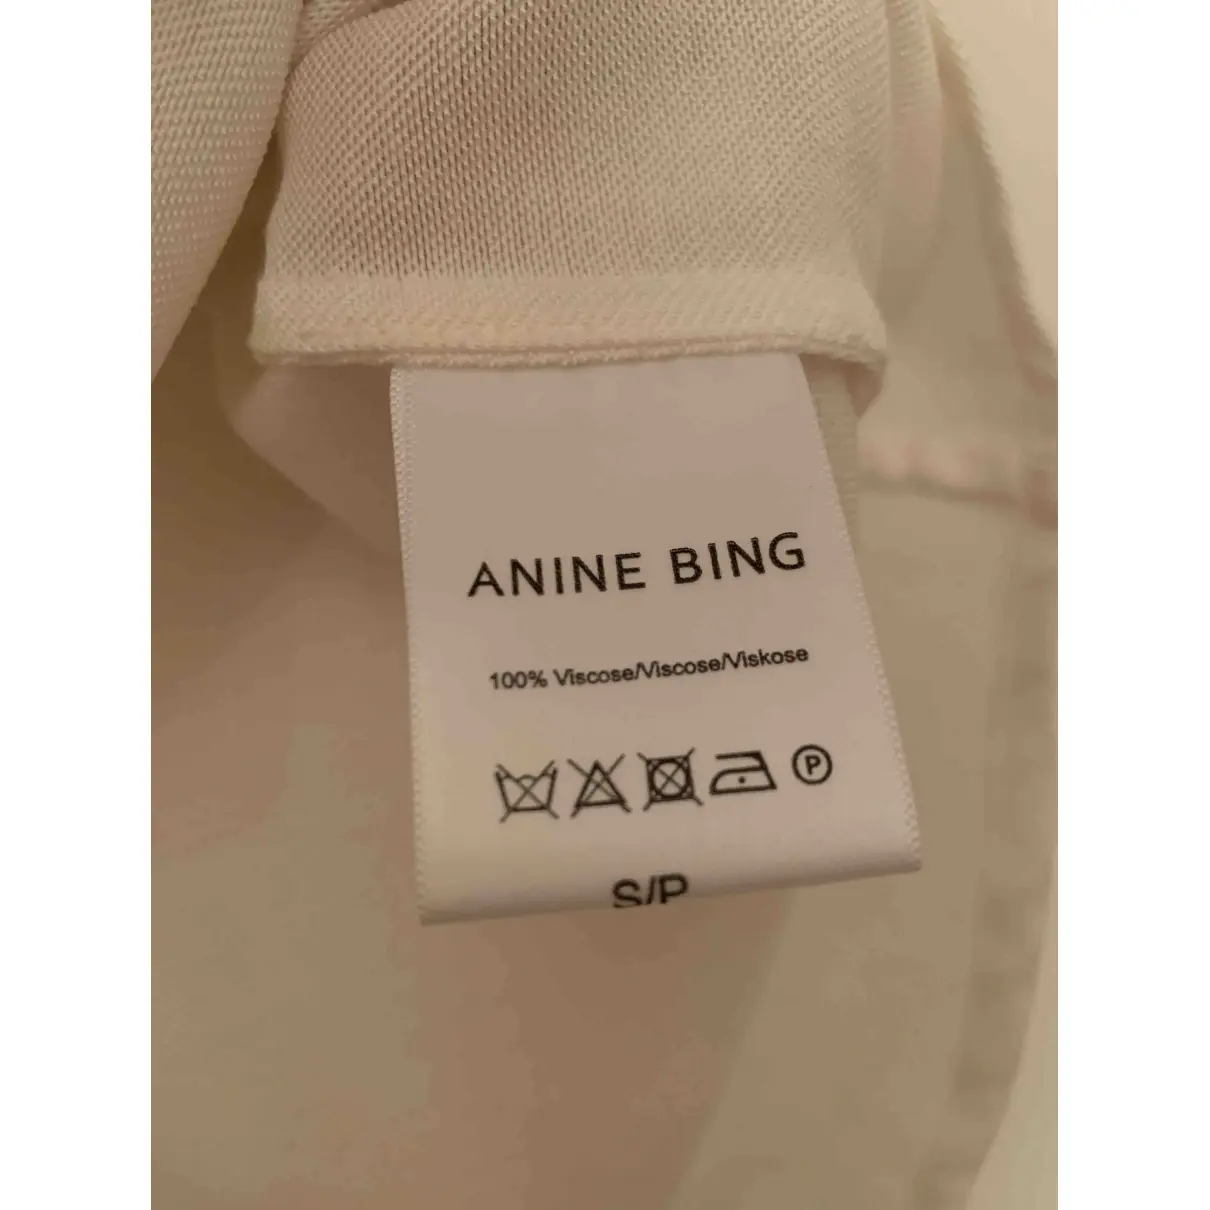 Buy Anine Bing Blouse online